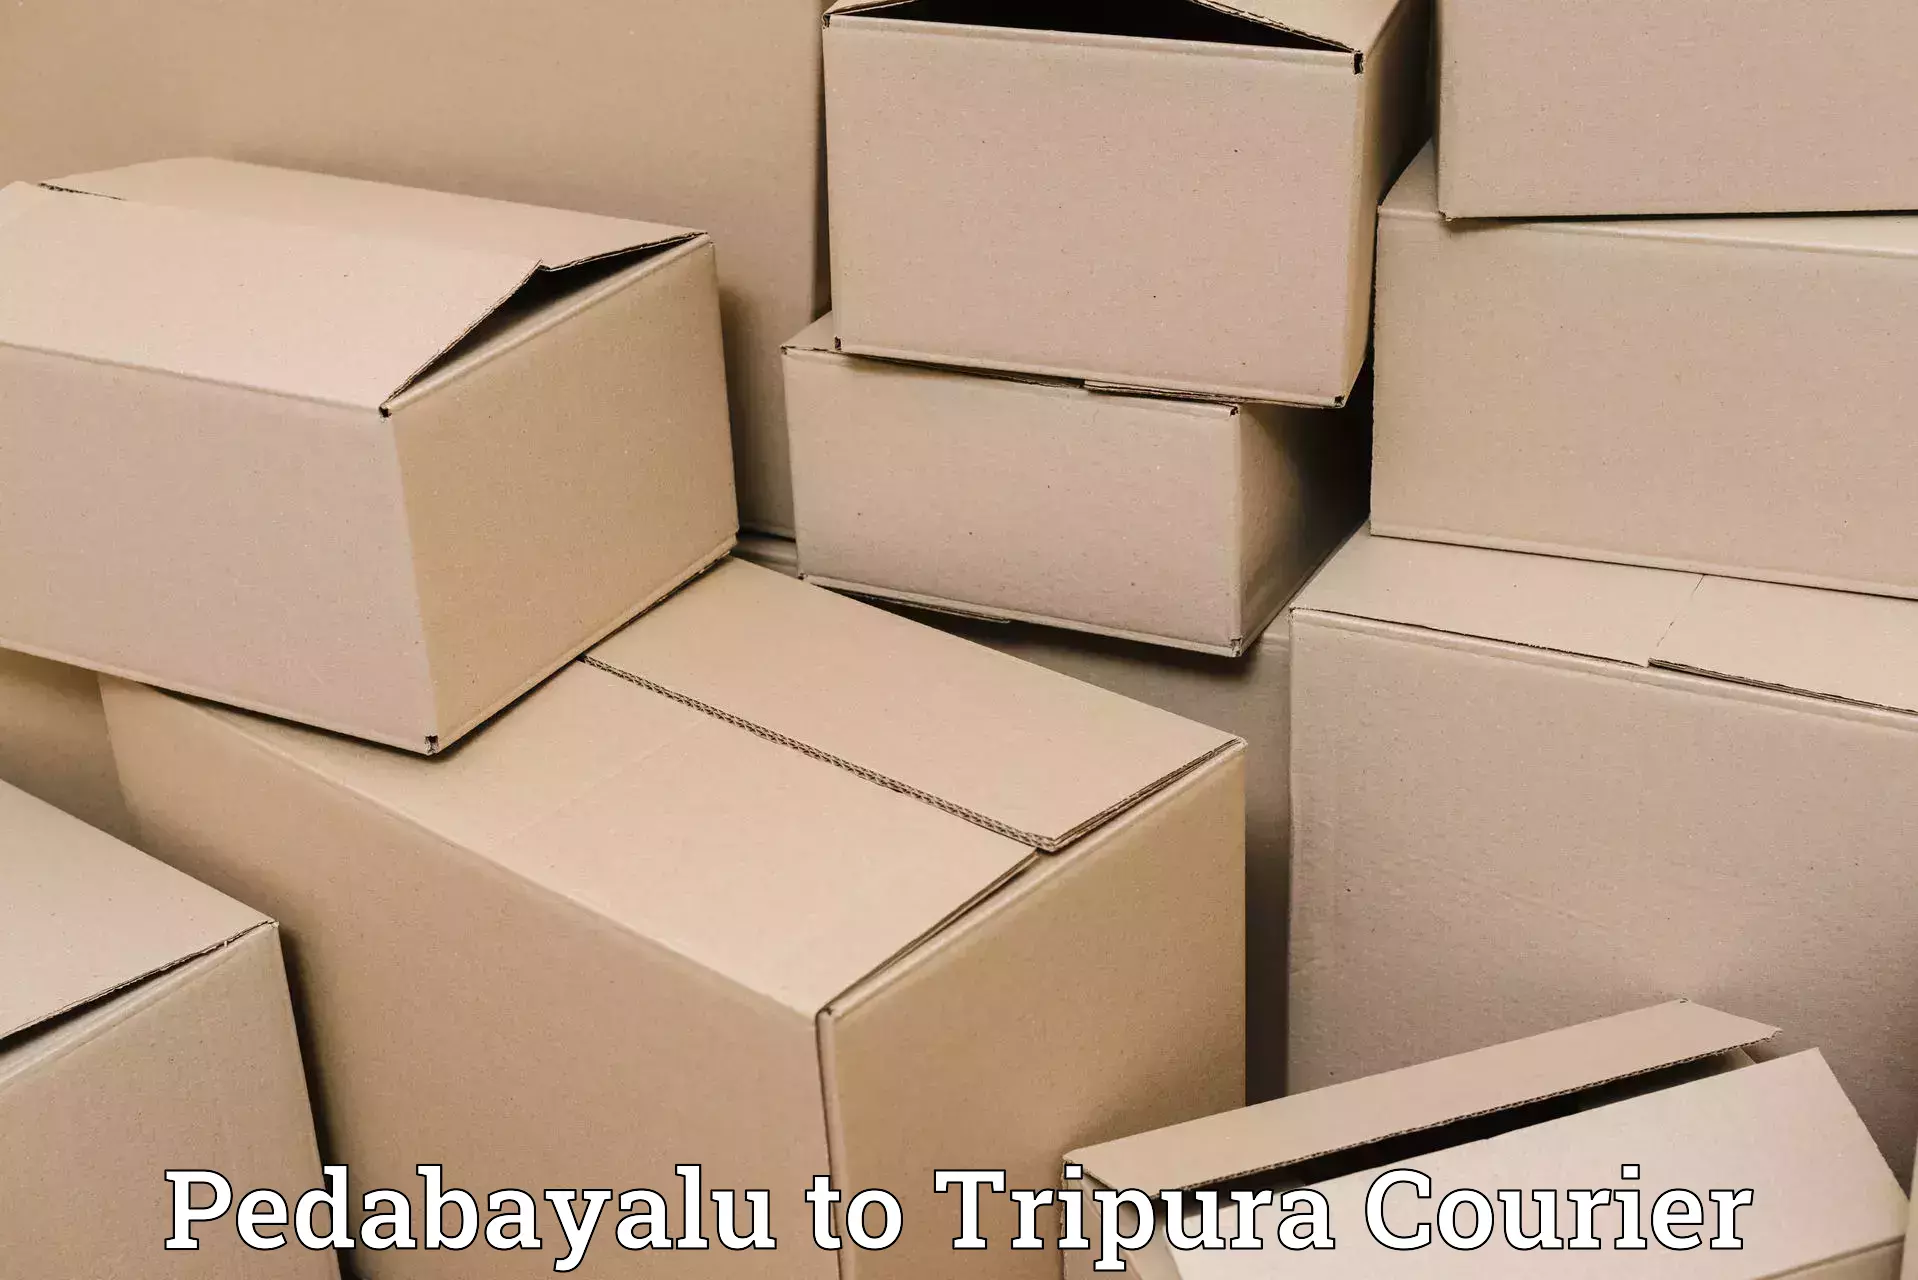 Express delivery capabilities Pedabayalu to IIIT Agartala